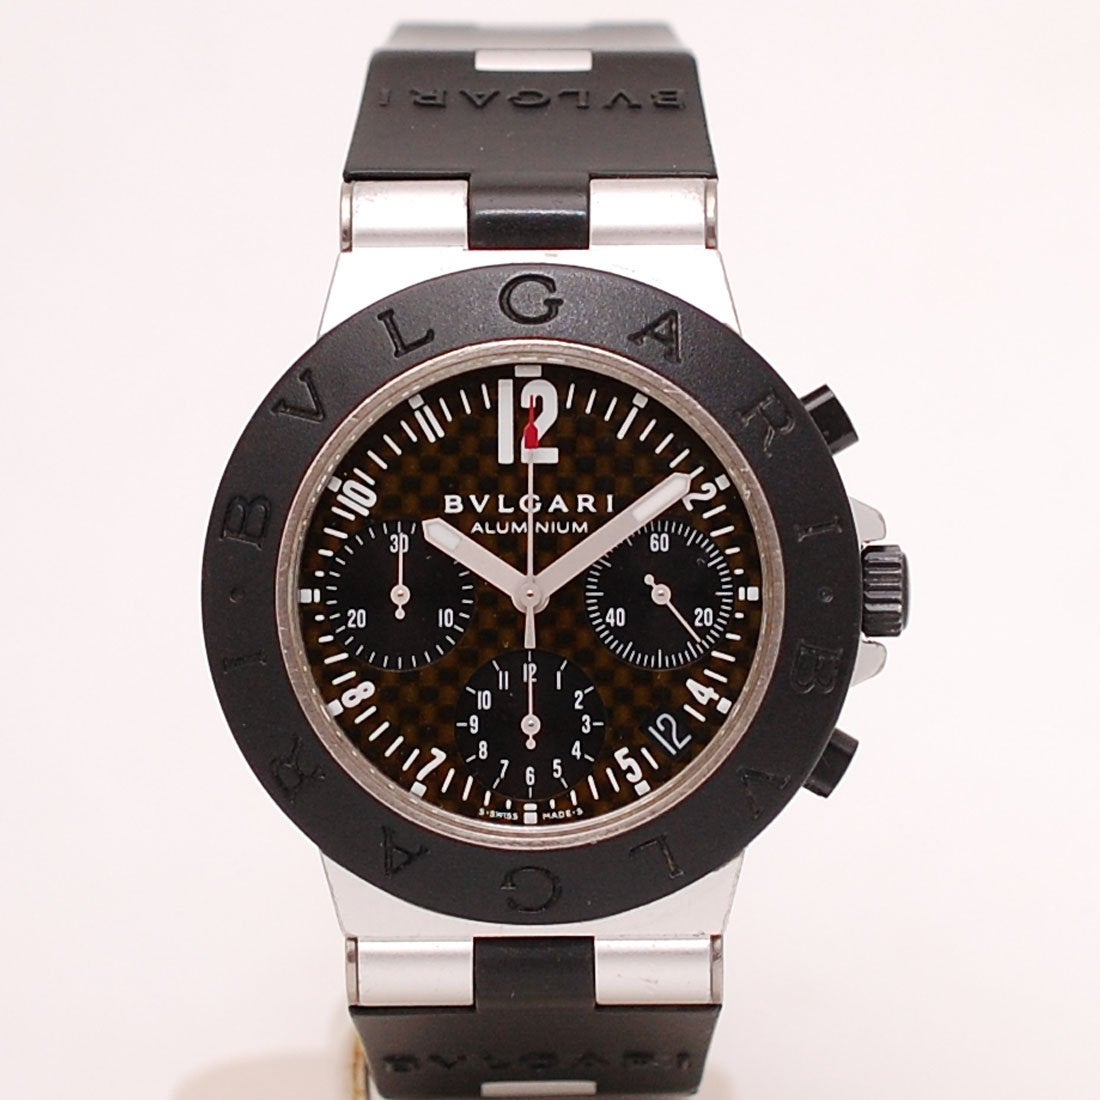 Bulgari Diagono Aluminum Automatic Chronograph Watch | WatchUSeek Watch ...